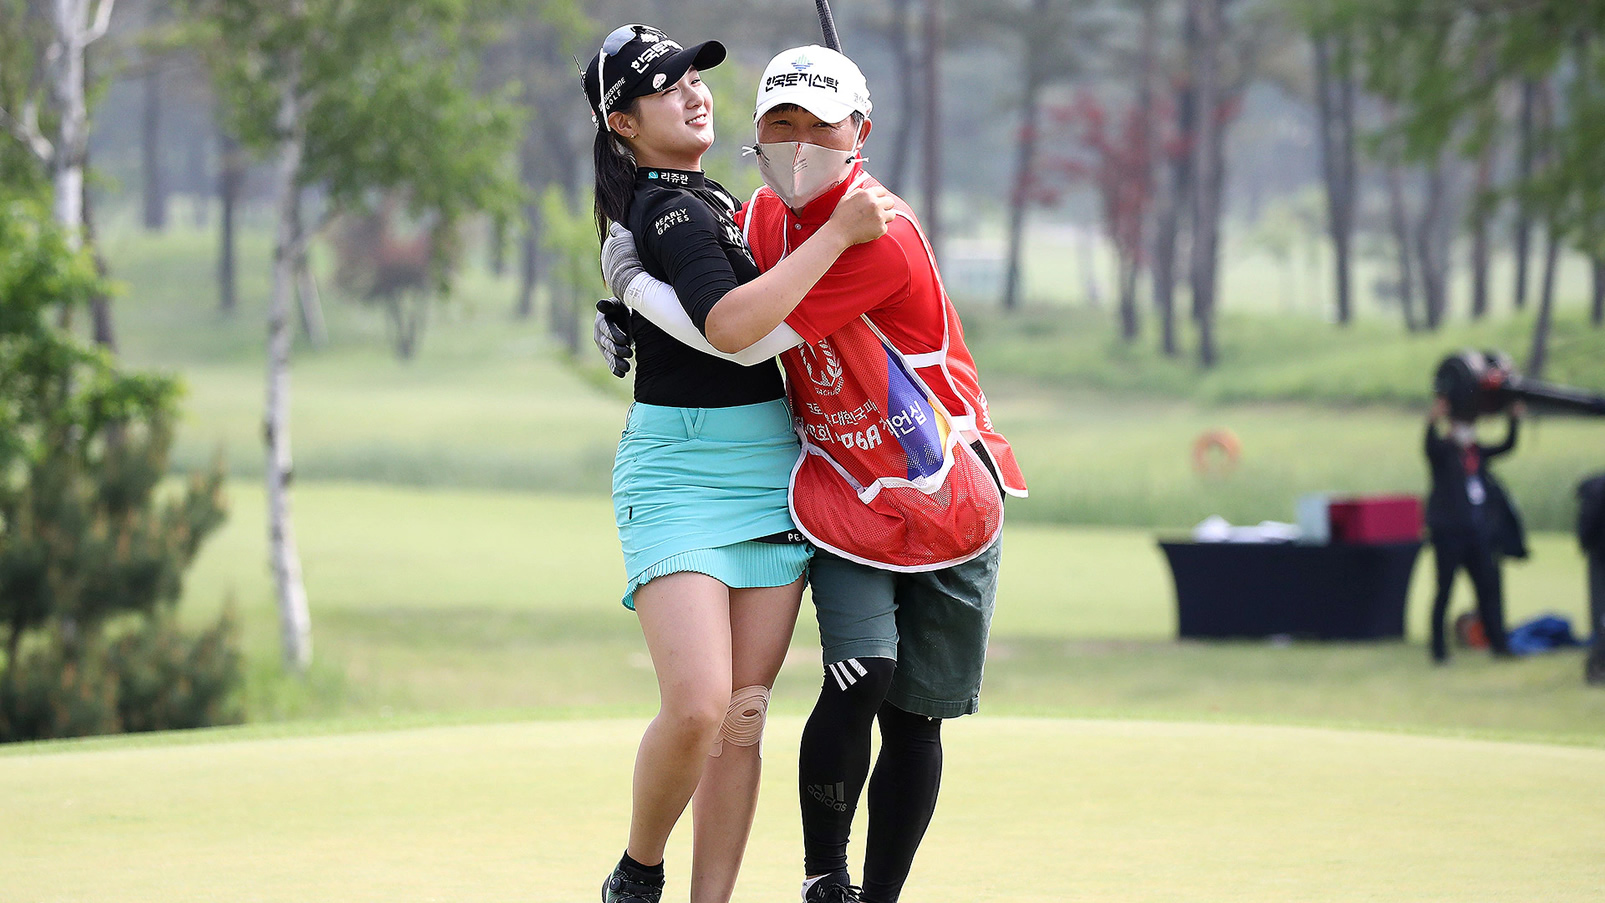 Park-wins-in-golf-return